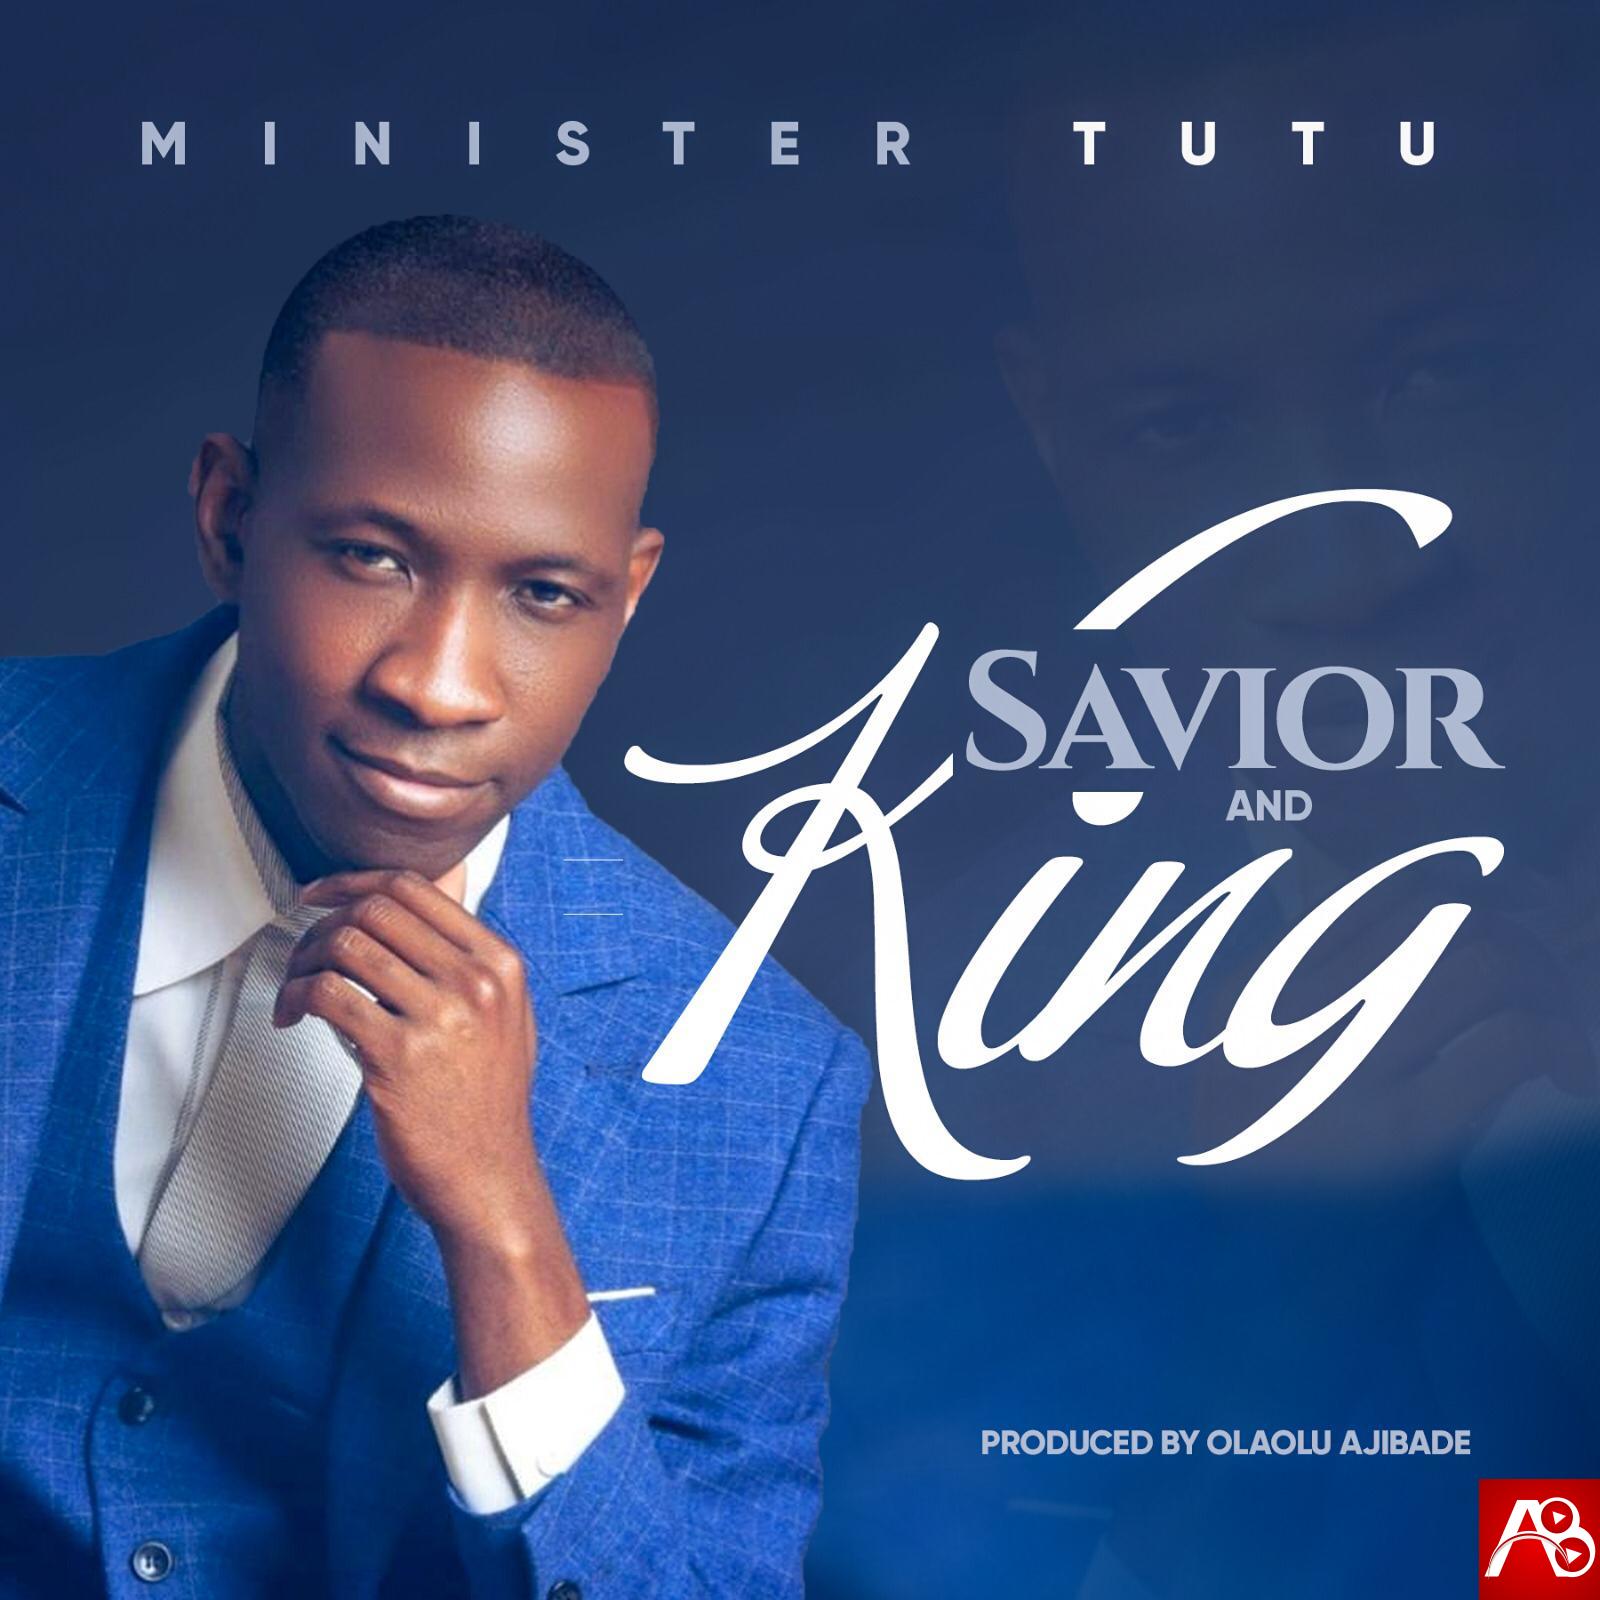 Minister Tutu - Savior and King